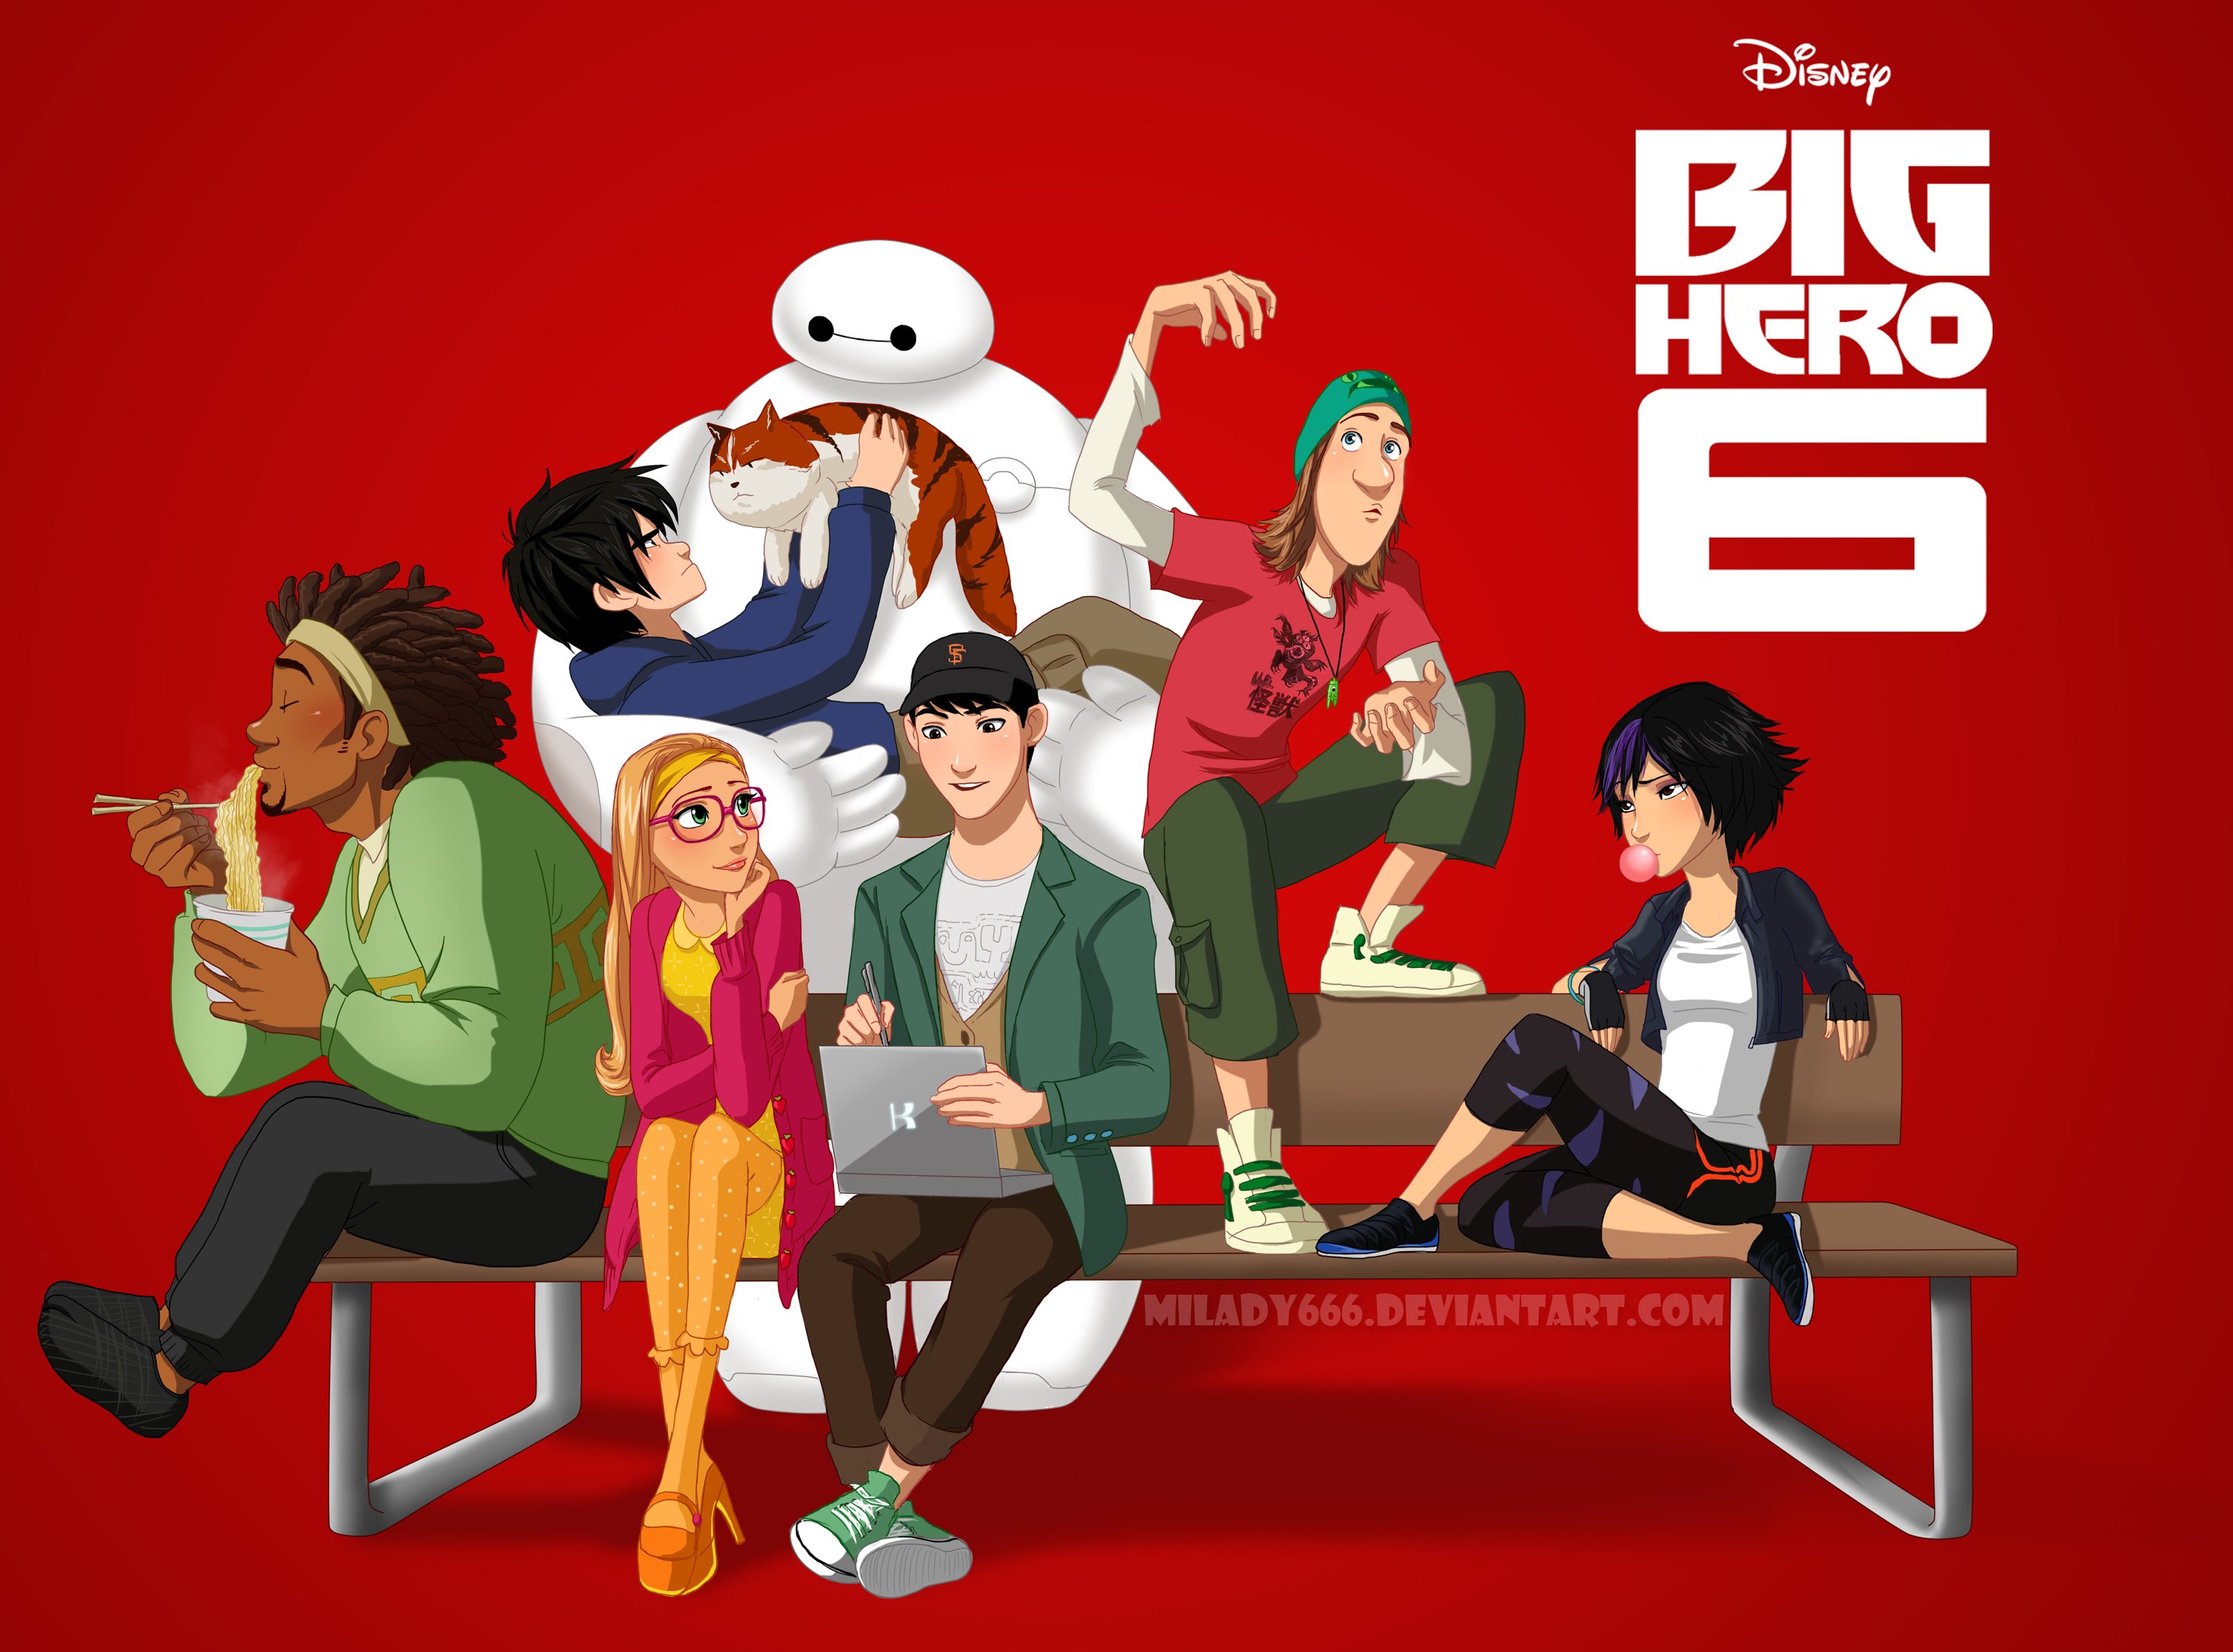 Big Hero Animation Action Adventure Family Robot Cgi Superhero